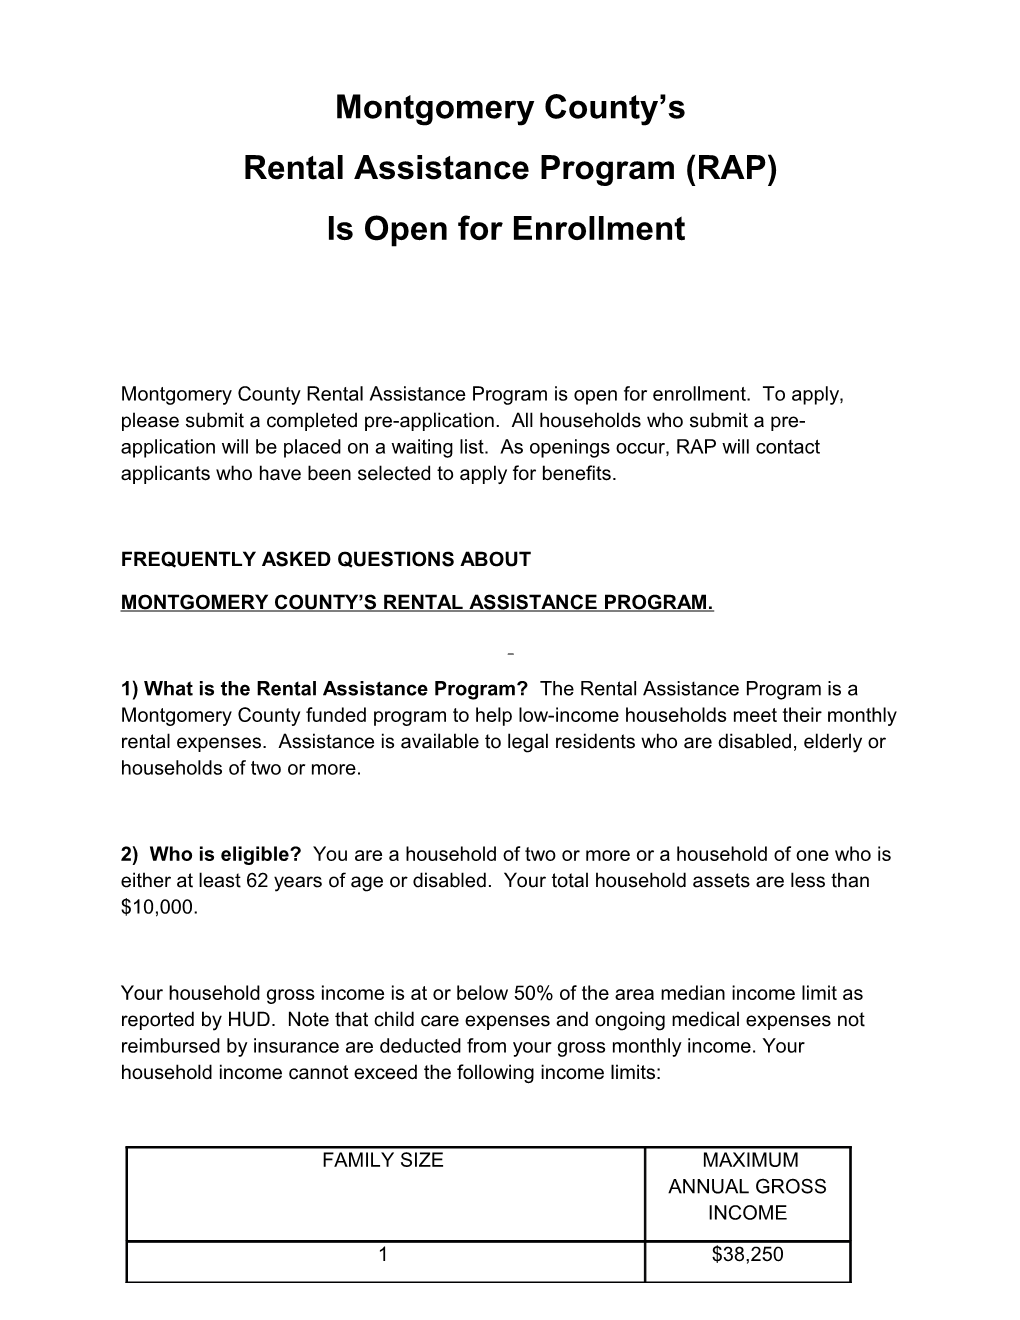 Montgomery County S Rental Assistance Program (RAP) Waiting List Will Open February 28, 2011